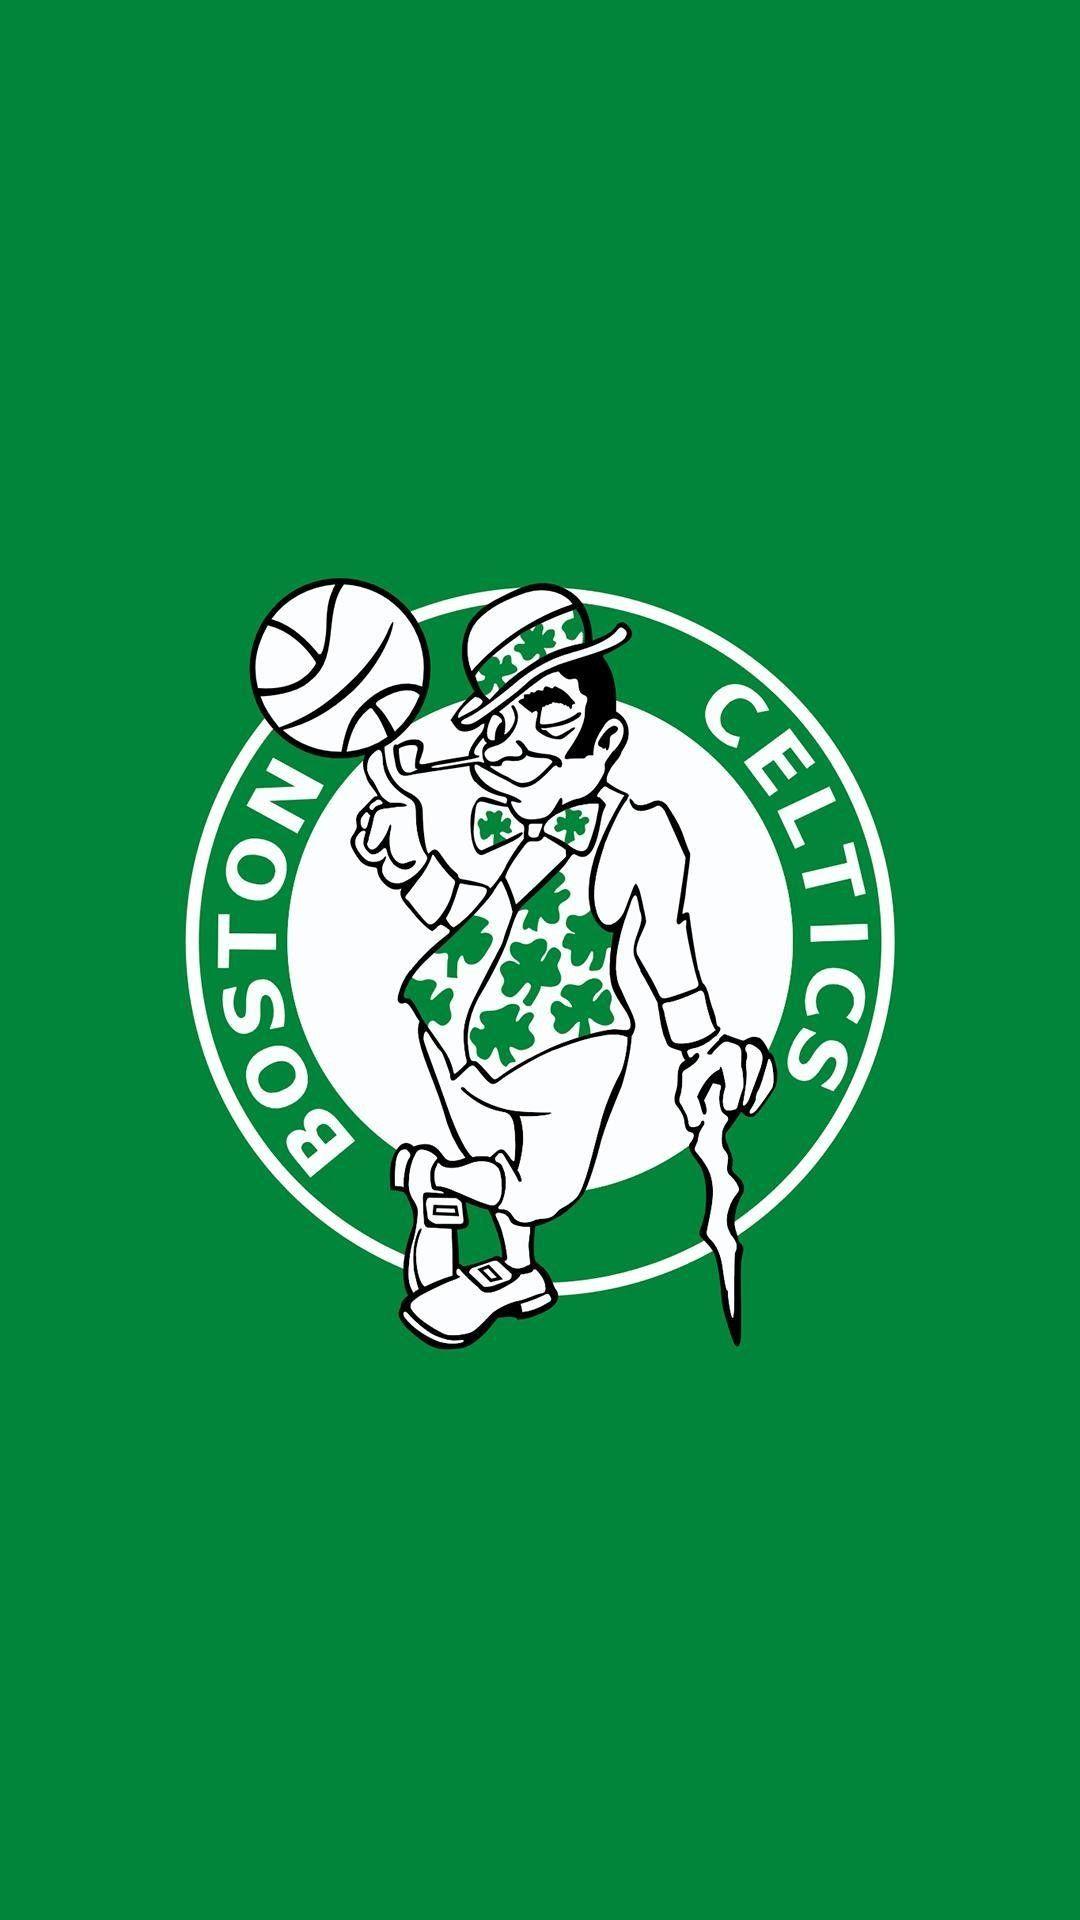 Boston Celtics iPhone Wallpapers - Top